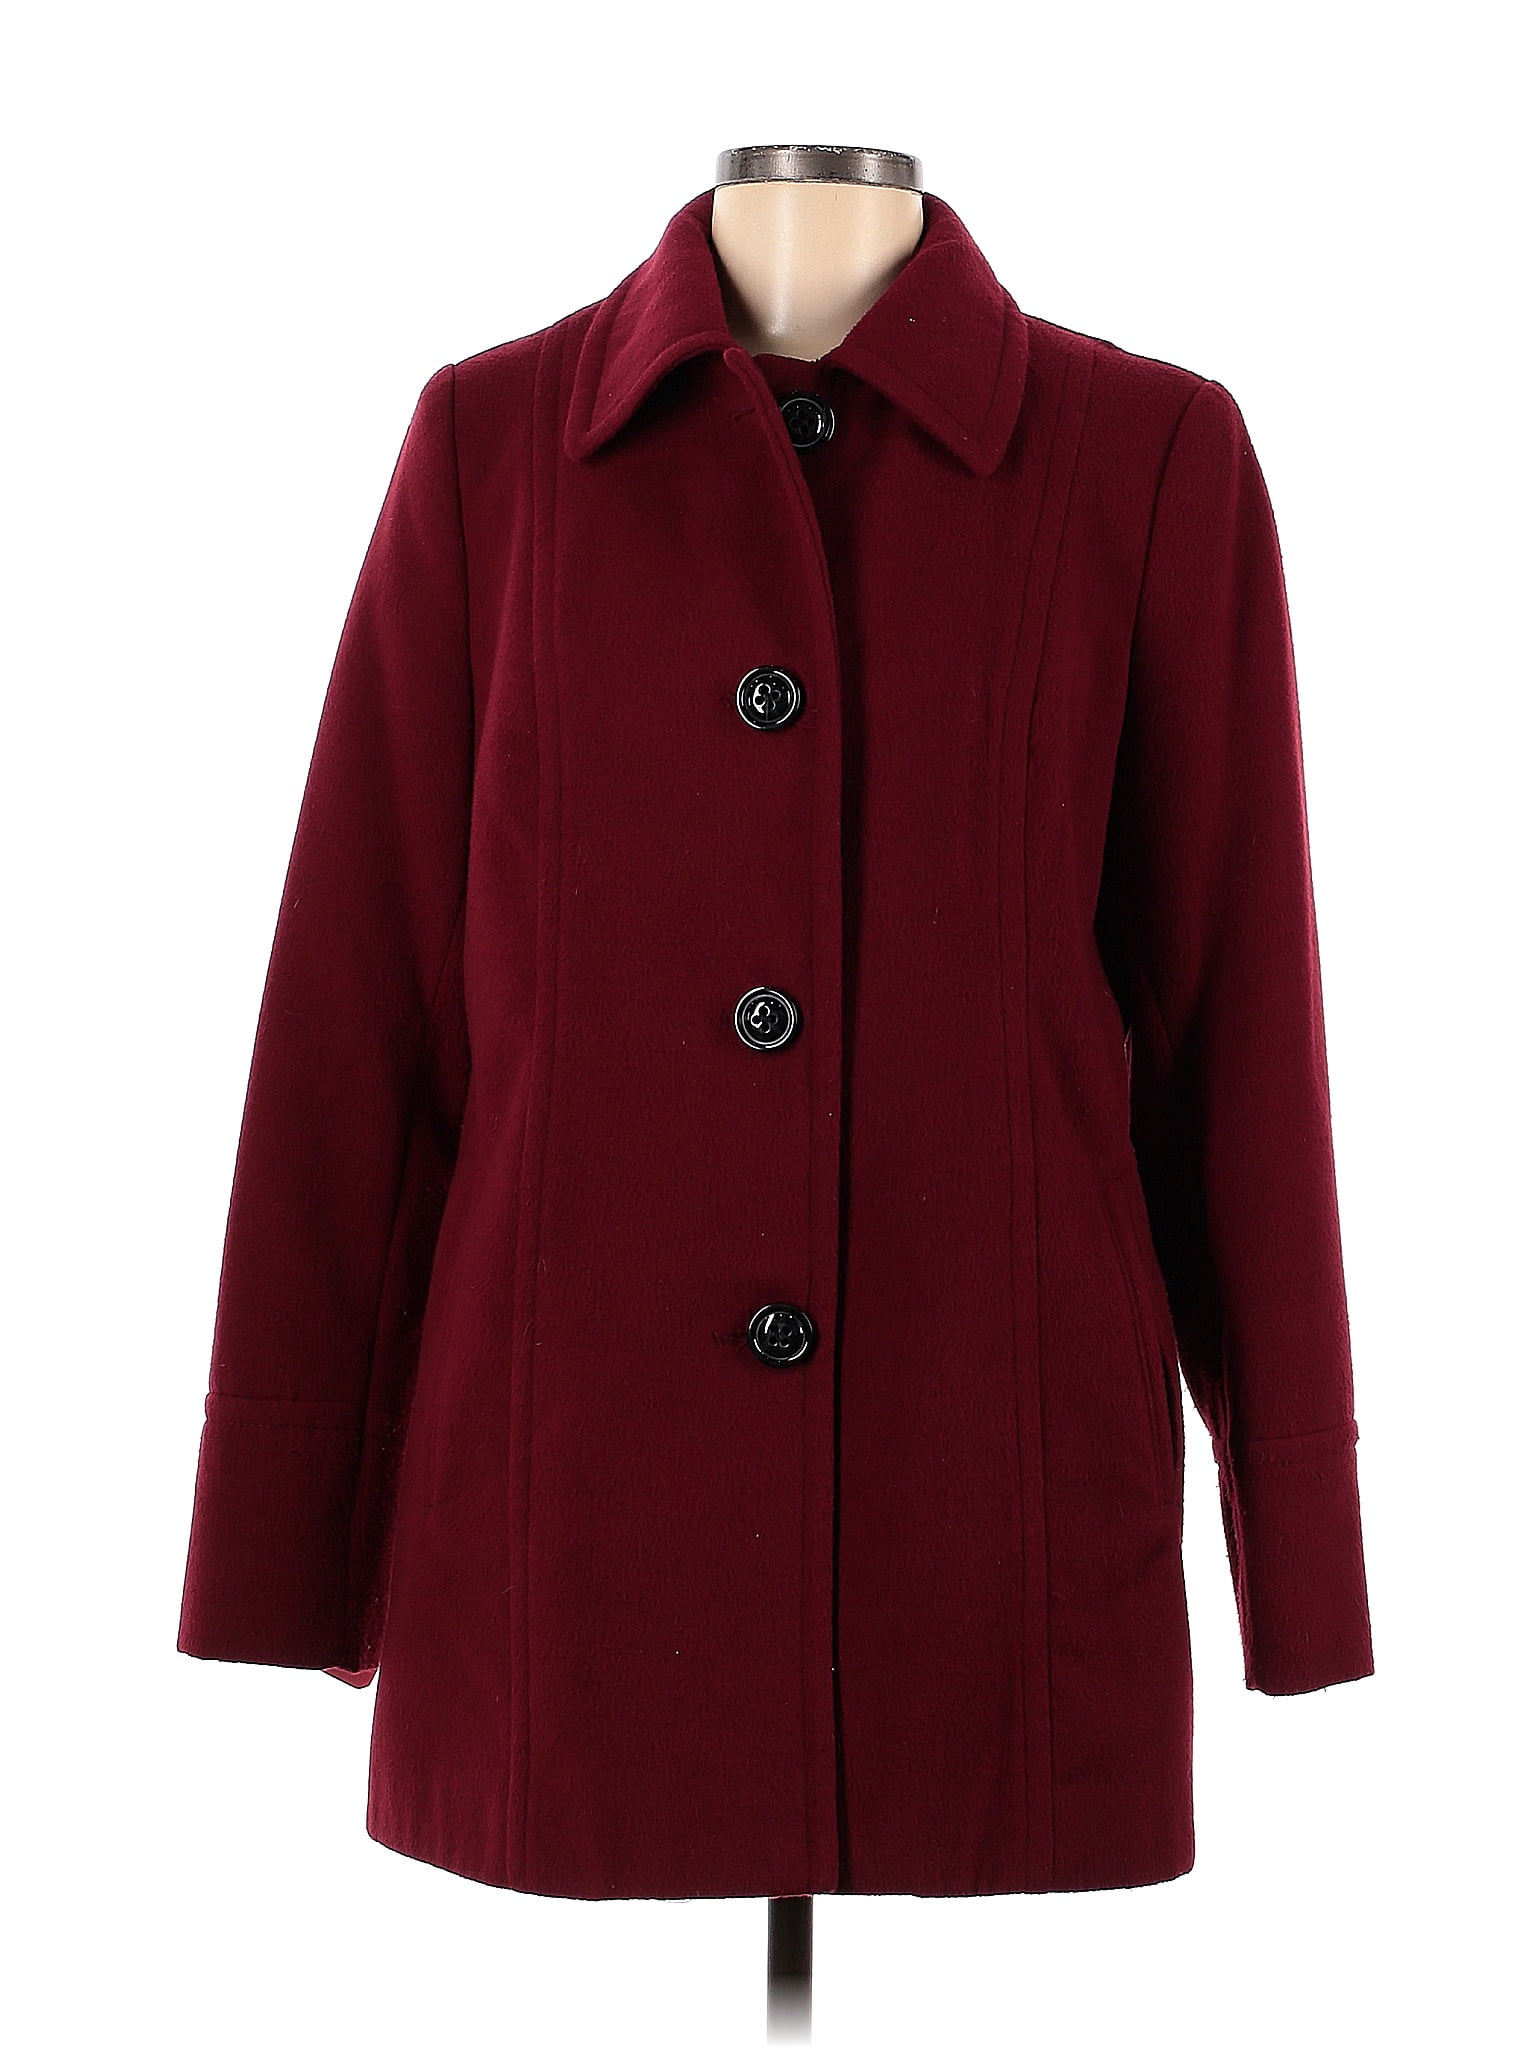 Liz Claiborne Solid Maroon Burgundy Coat Size M - 65% off | thredUP